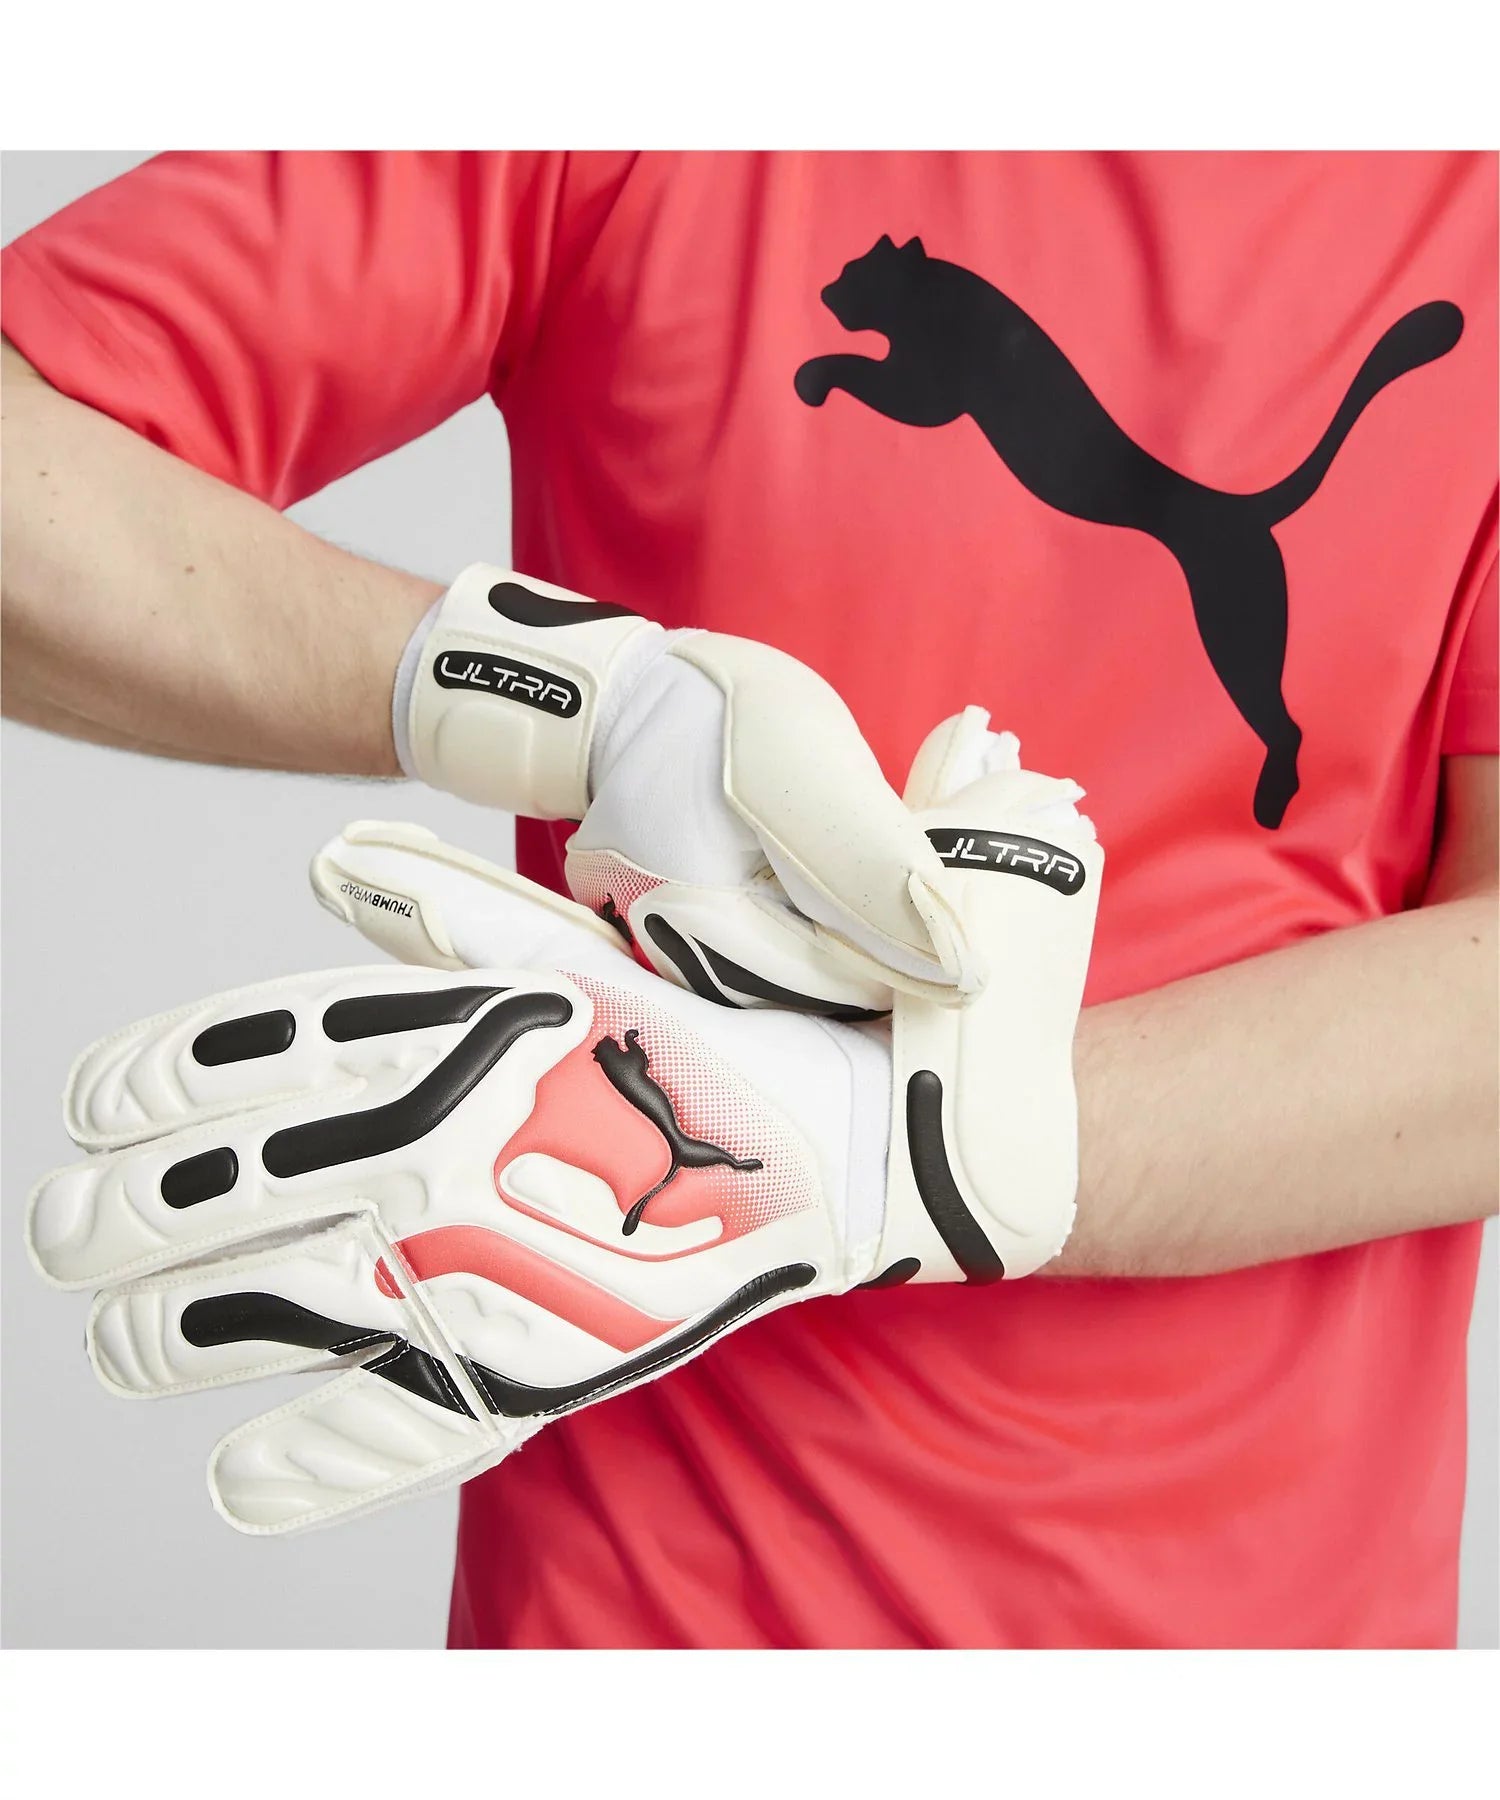 PUMA Ultra Pro Protect RC Goalkeeper Gloves